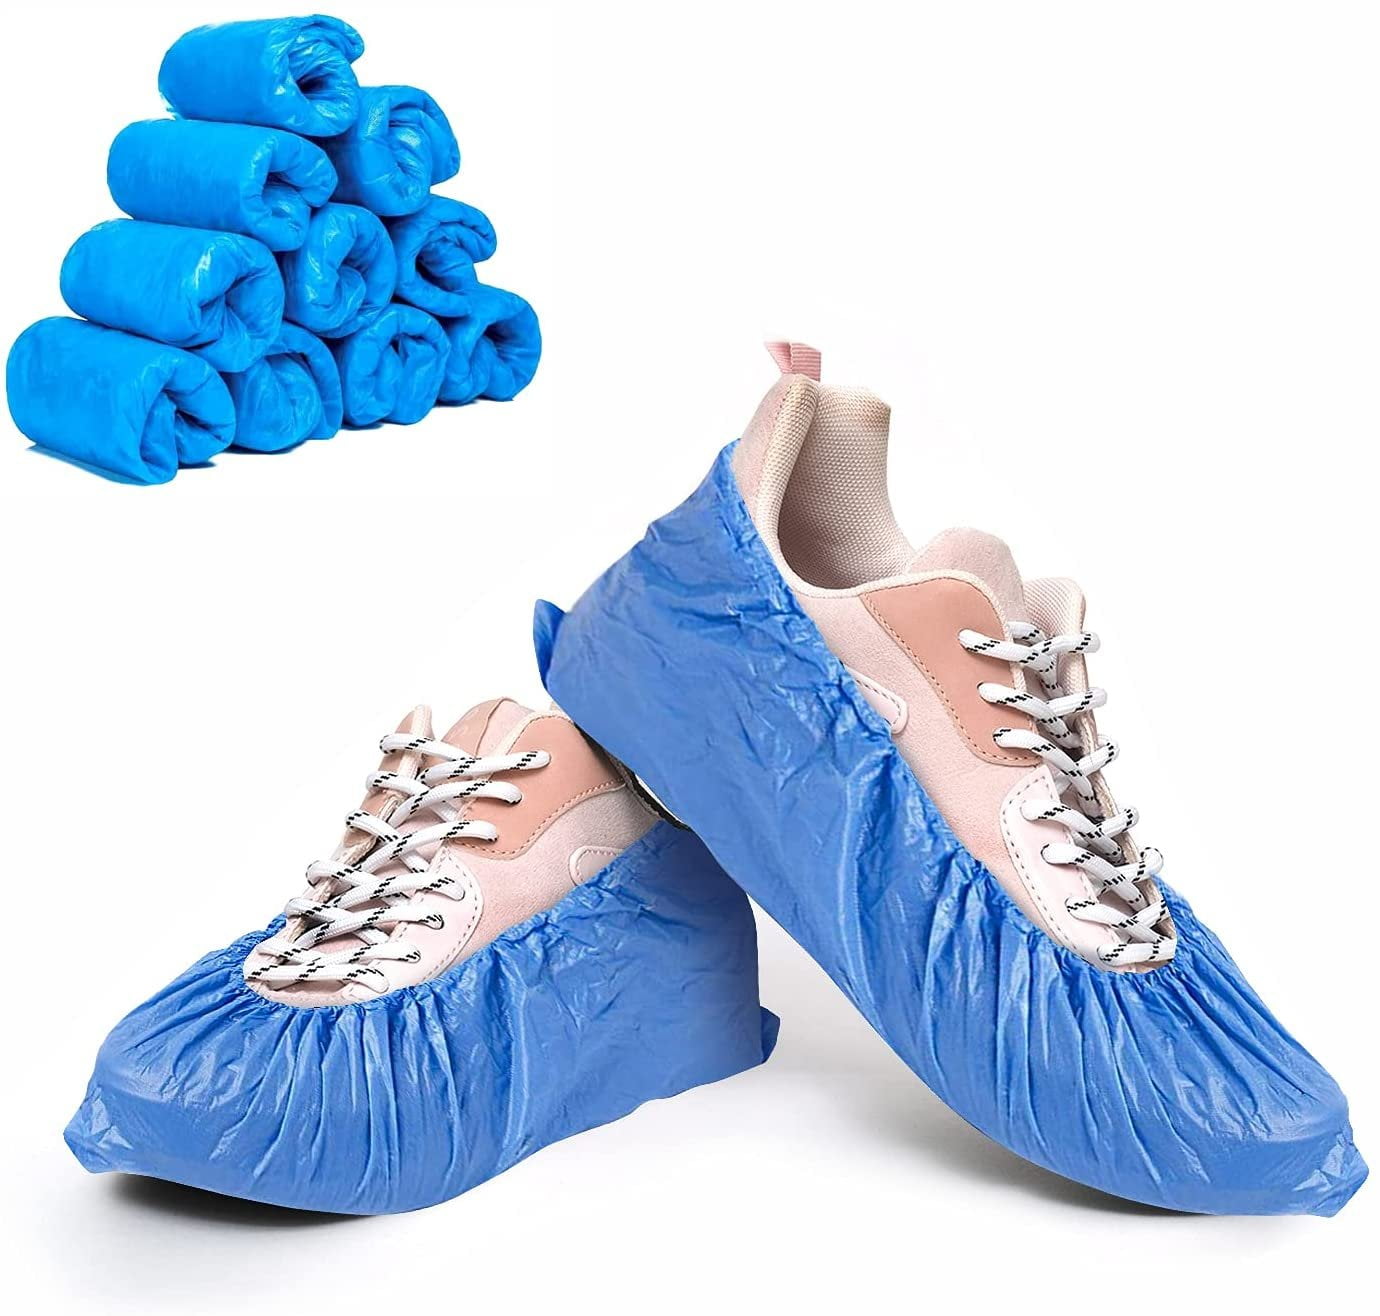 Sanitary Blue Shoe Cover Non Slip Disposable Floor Protectors ONE SIZE 100PCS 